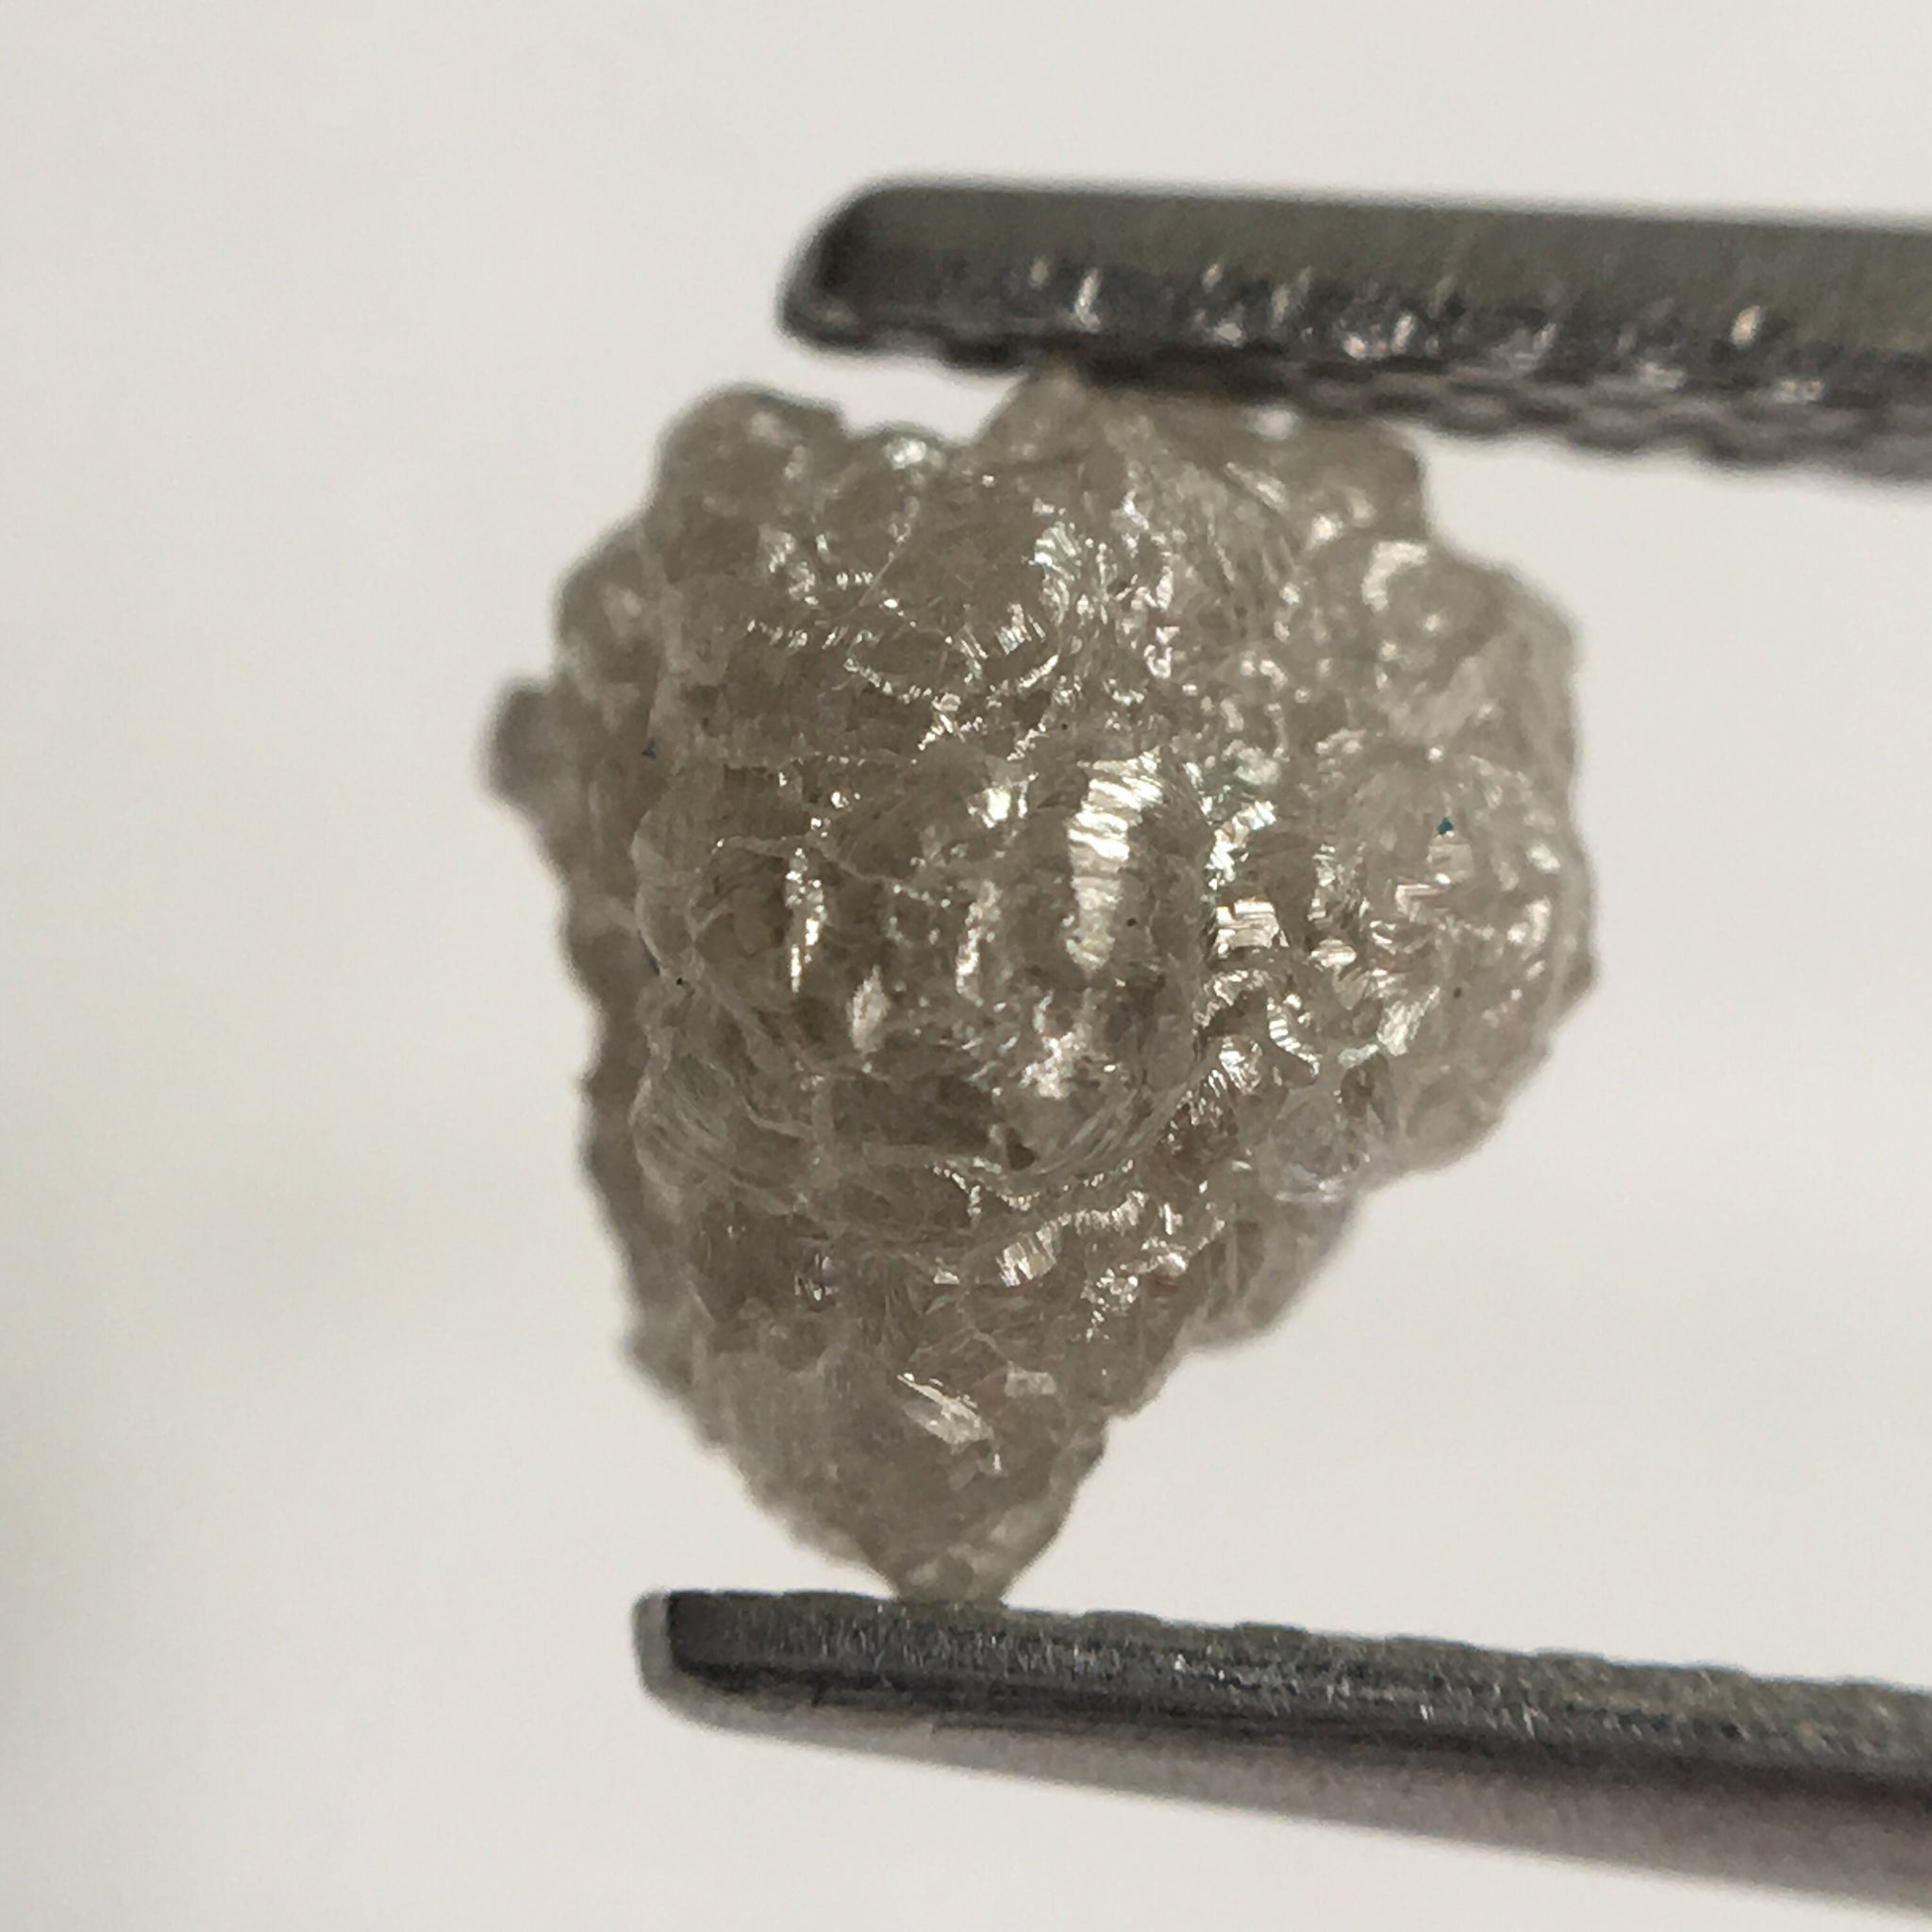 1.58 Ct Natural Uncut Rough Raw Loose Diamond 7.20 mm x 6.00 mm, Grey Color Shining Diamond Crystal Earth Mined Origin South Africa SJ24/40